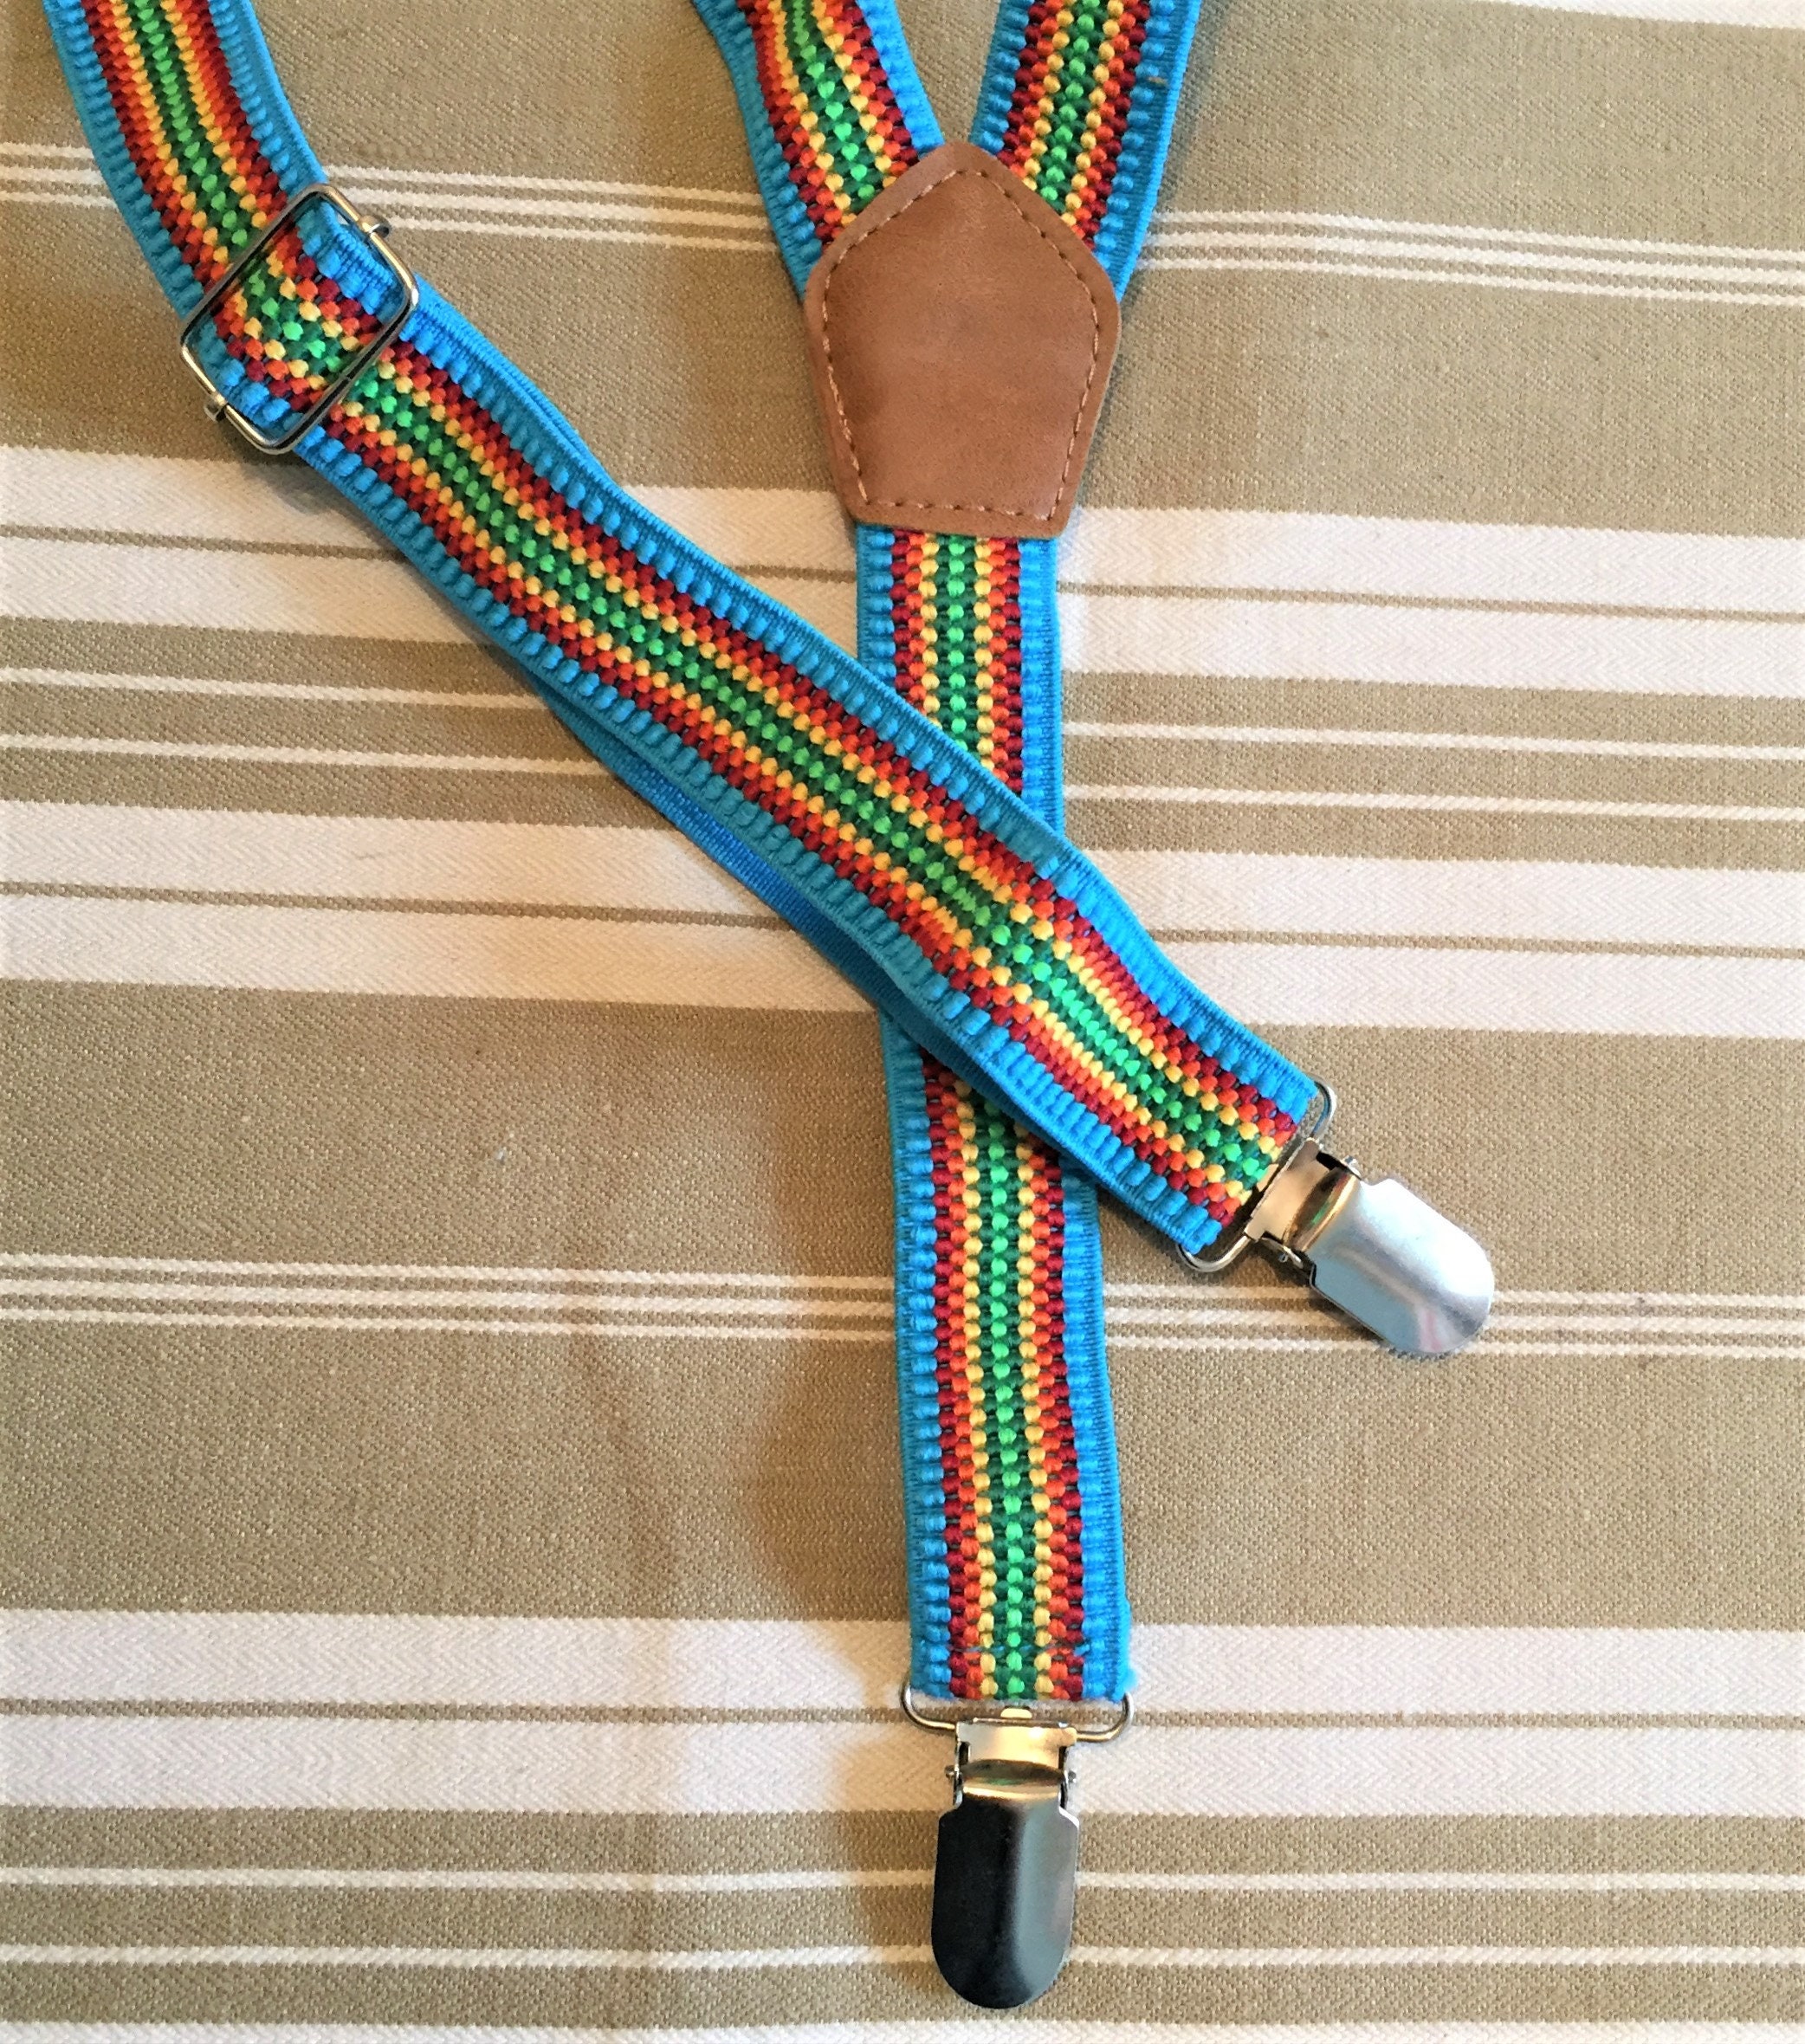 Colorful Suspenders Rainbow Suspenders Rainbow Straps Pride Suspenders Accessoires Riemen & bretels Bretels Rainbow Accessories Suspenders for Men and Women 